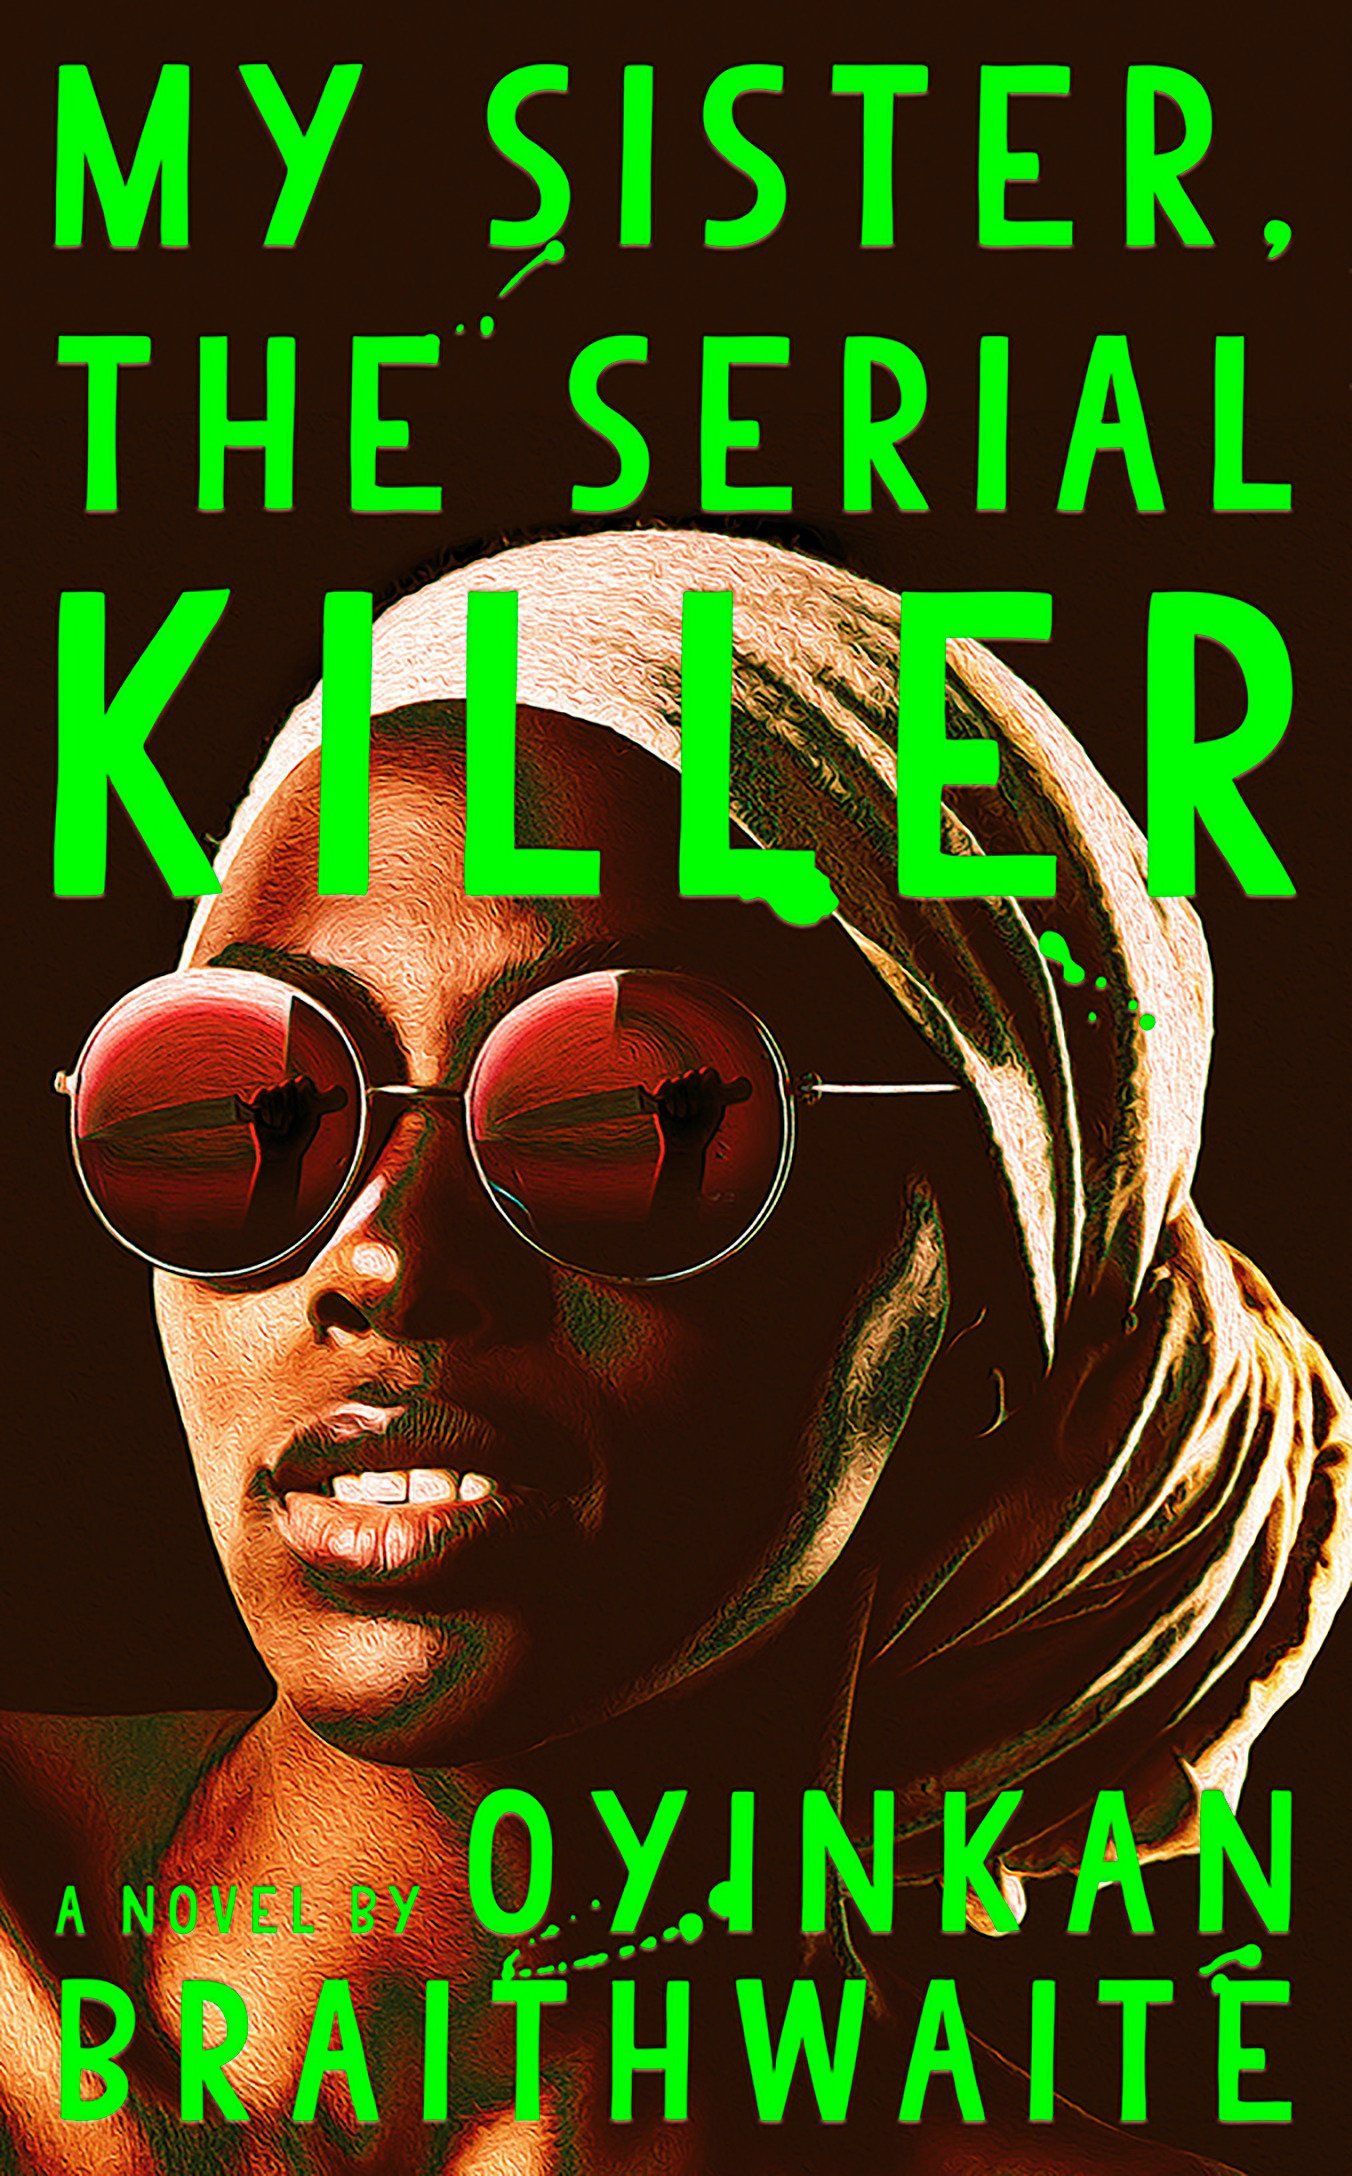 Sister Act: On “My Sister, the Serial Killer” by Oyinkan Braithwaite